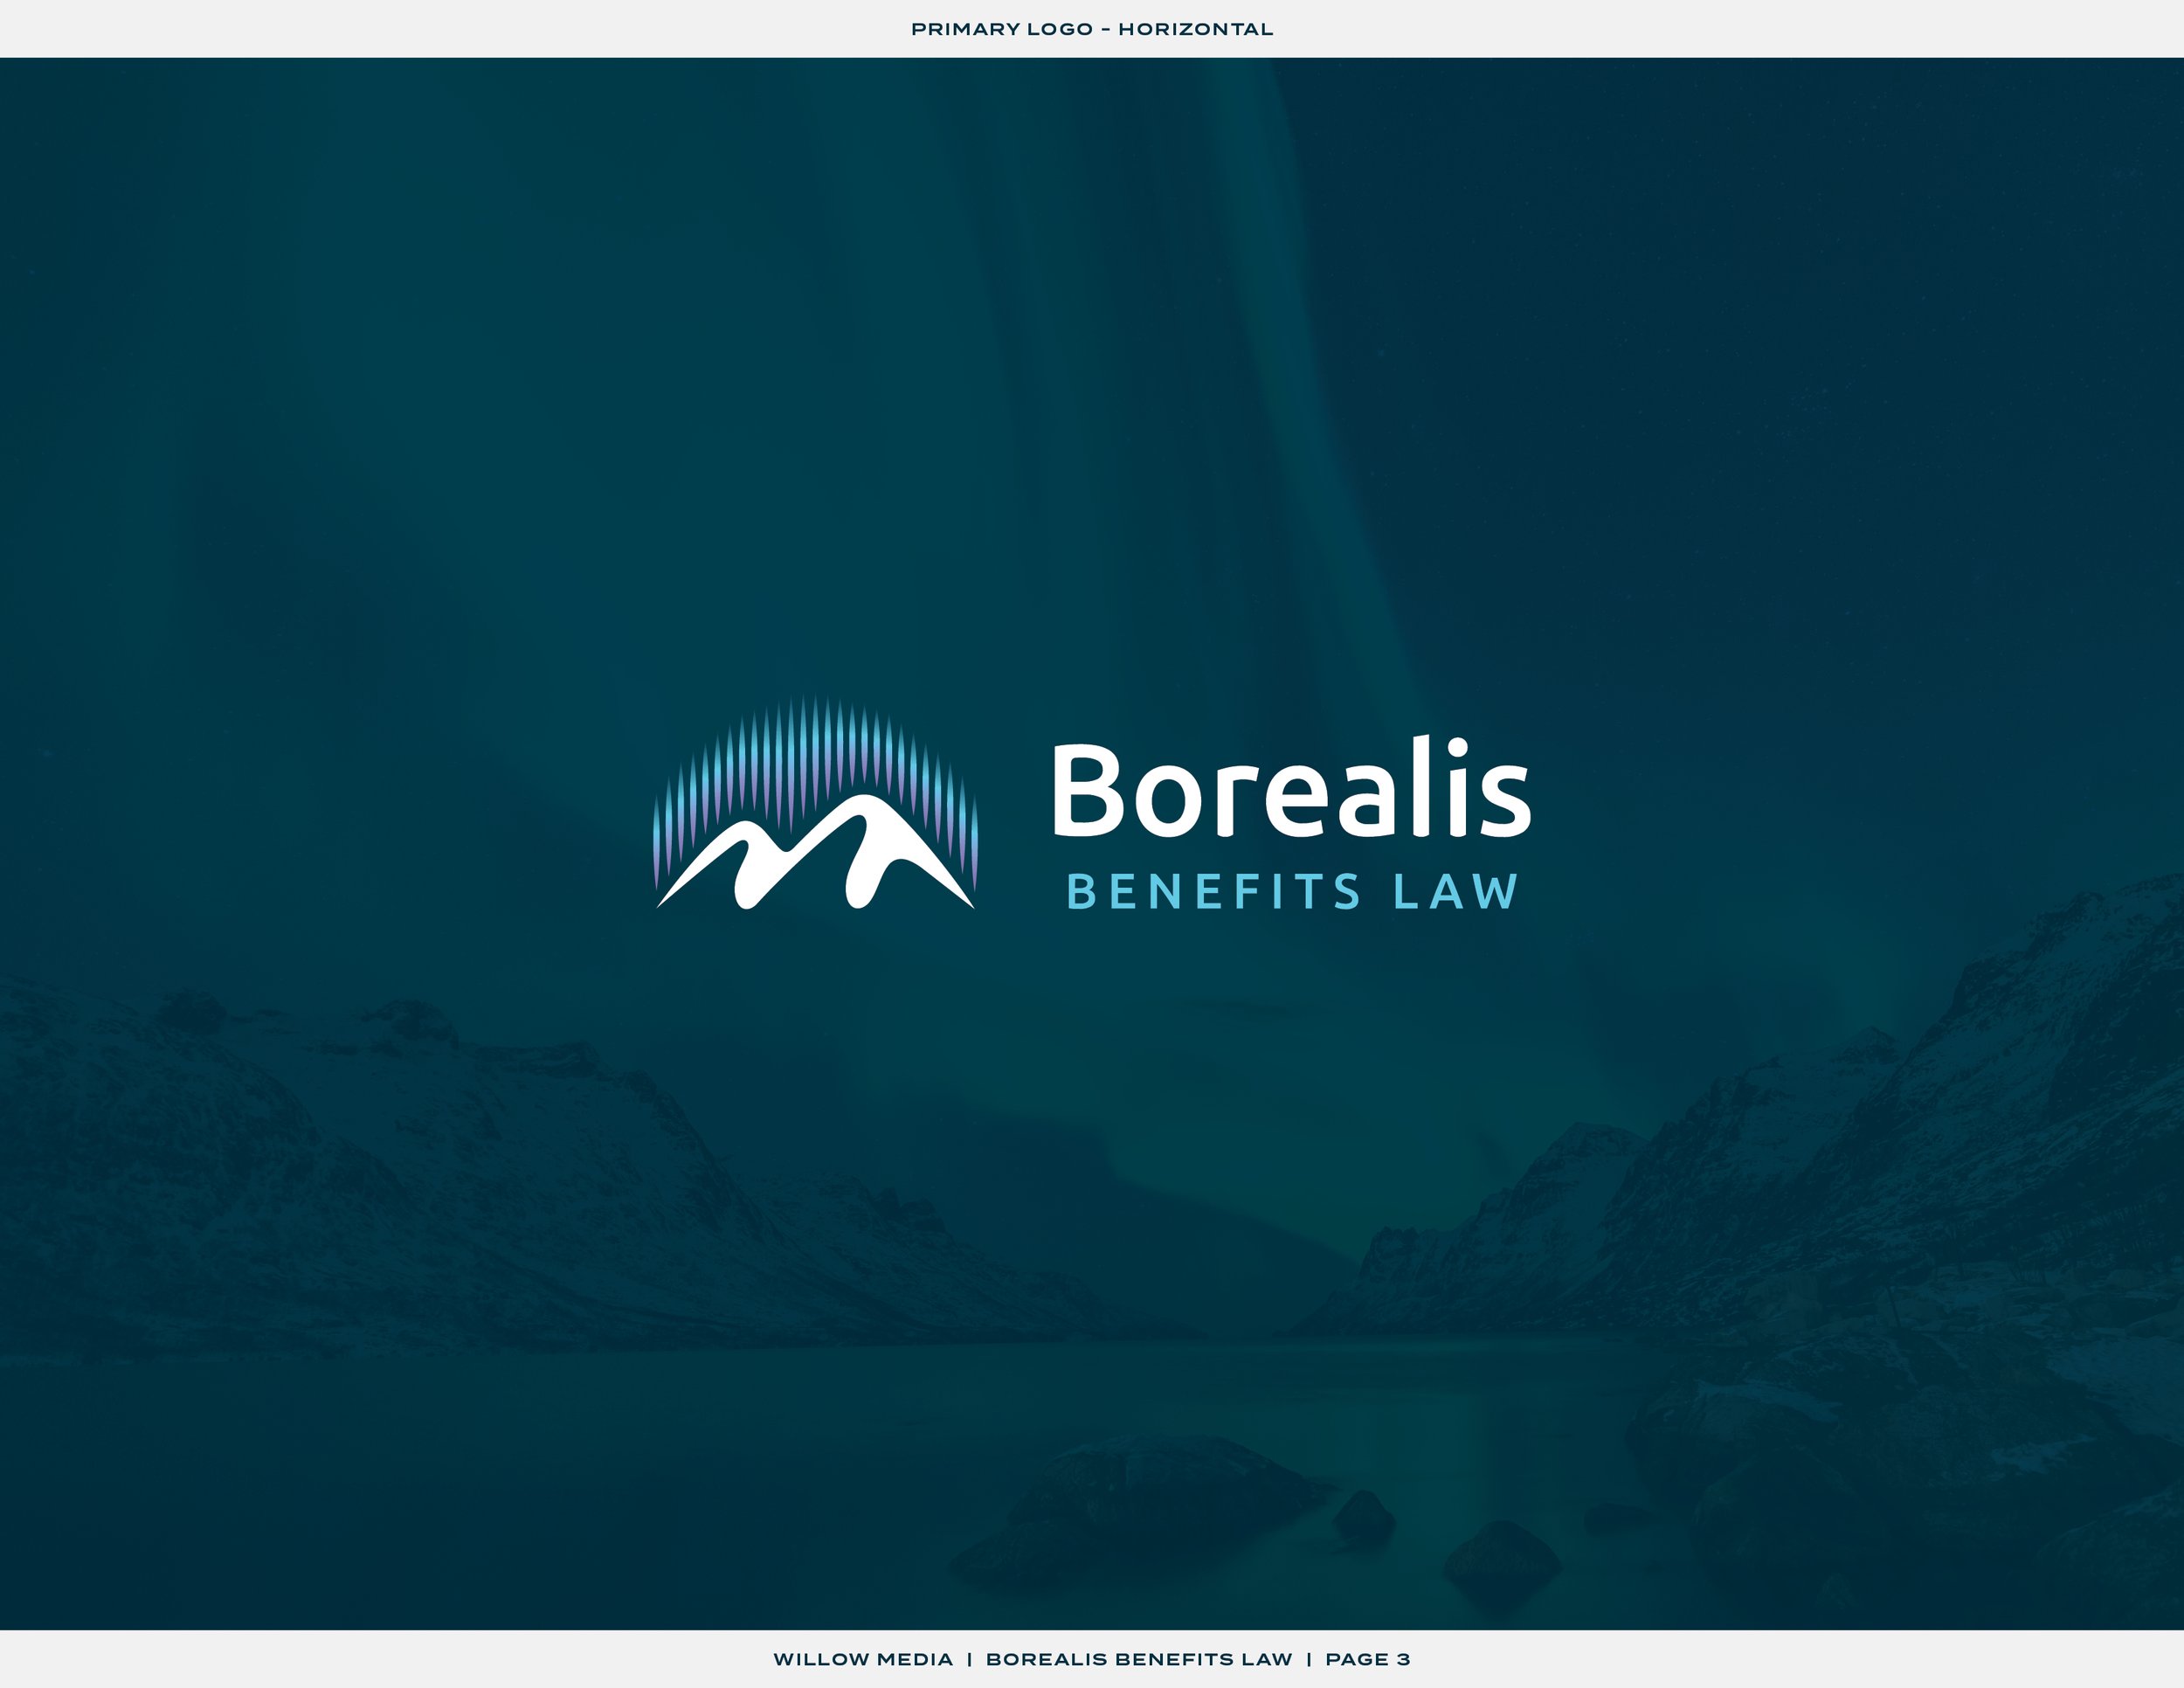 Borealis Benefits Law Brand Presentation | Willow Media3.jpg